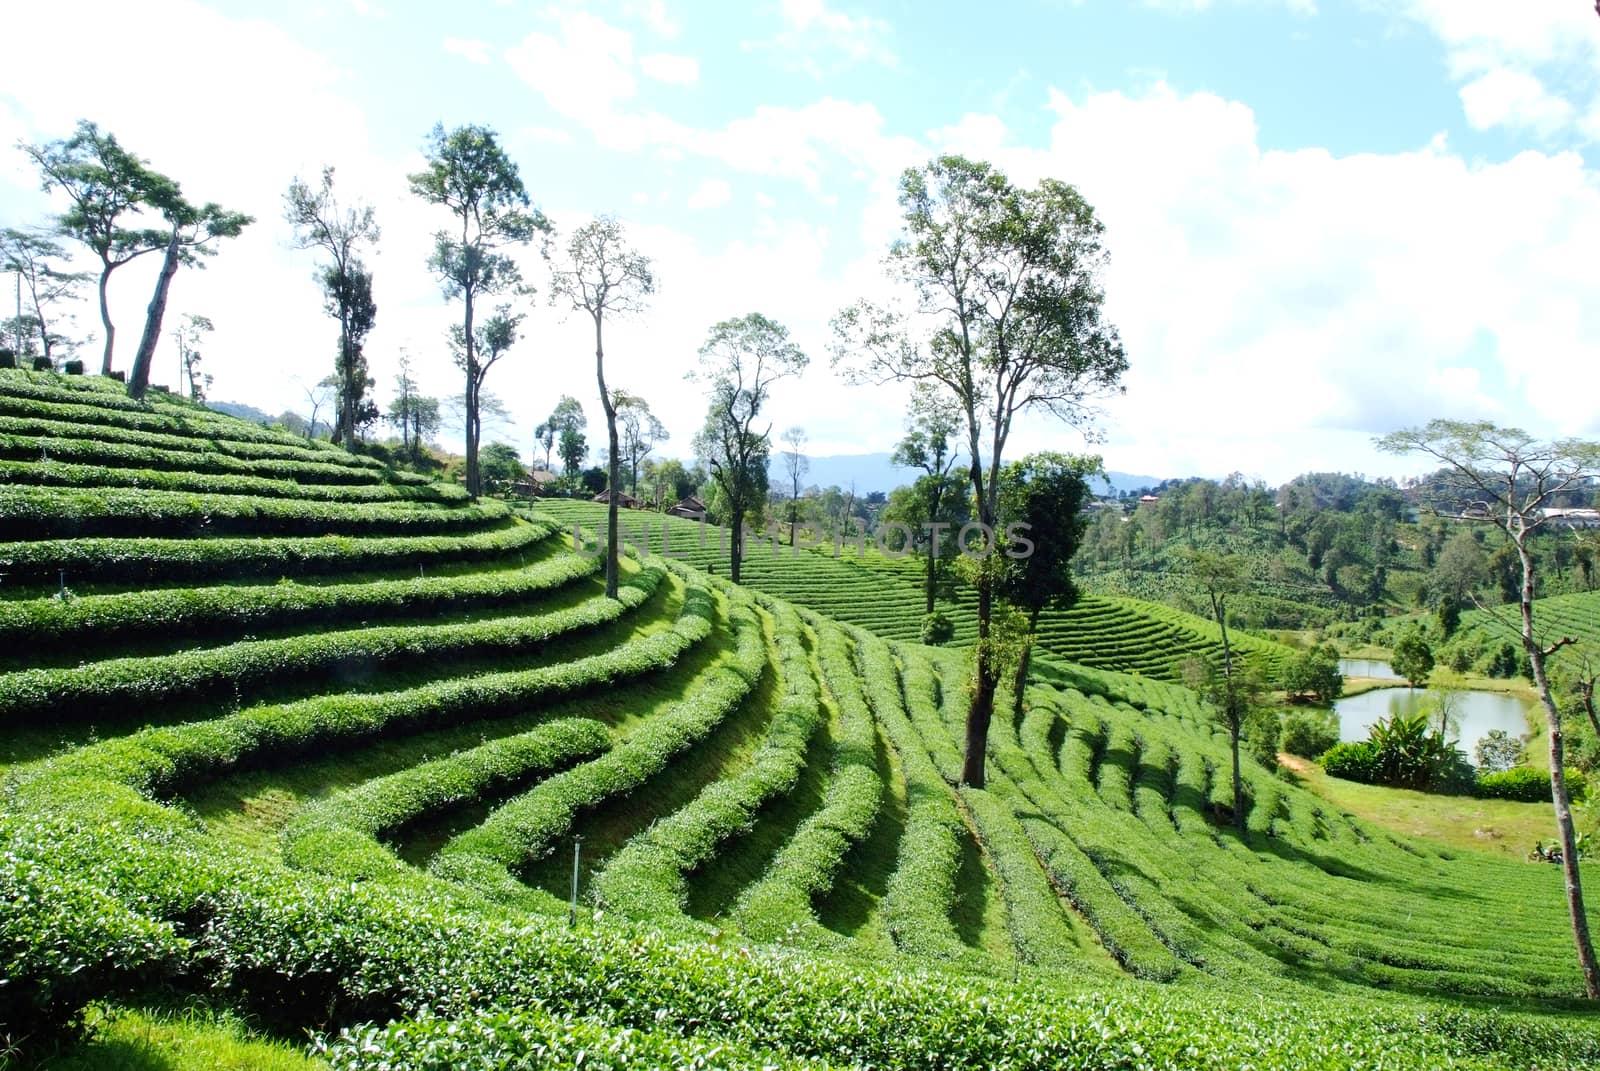 Tea Plantation Landscape 6 by ideation90